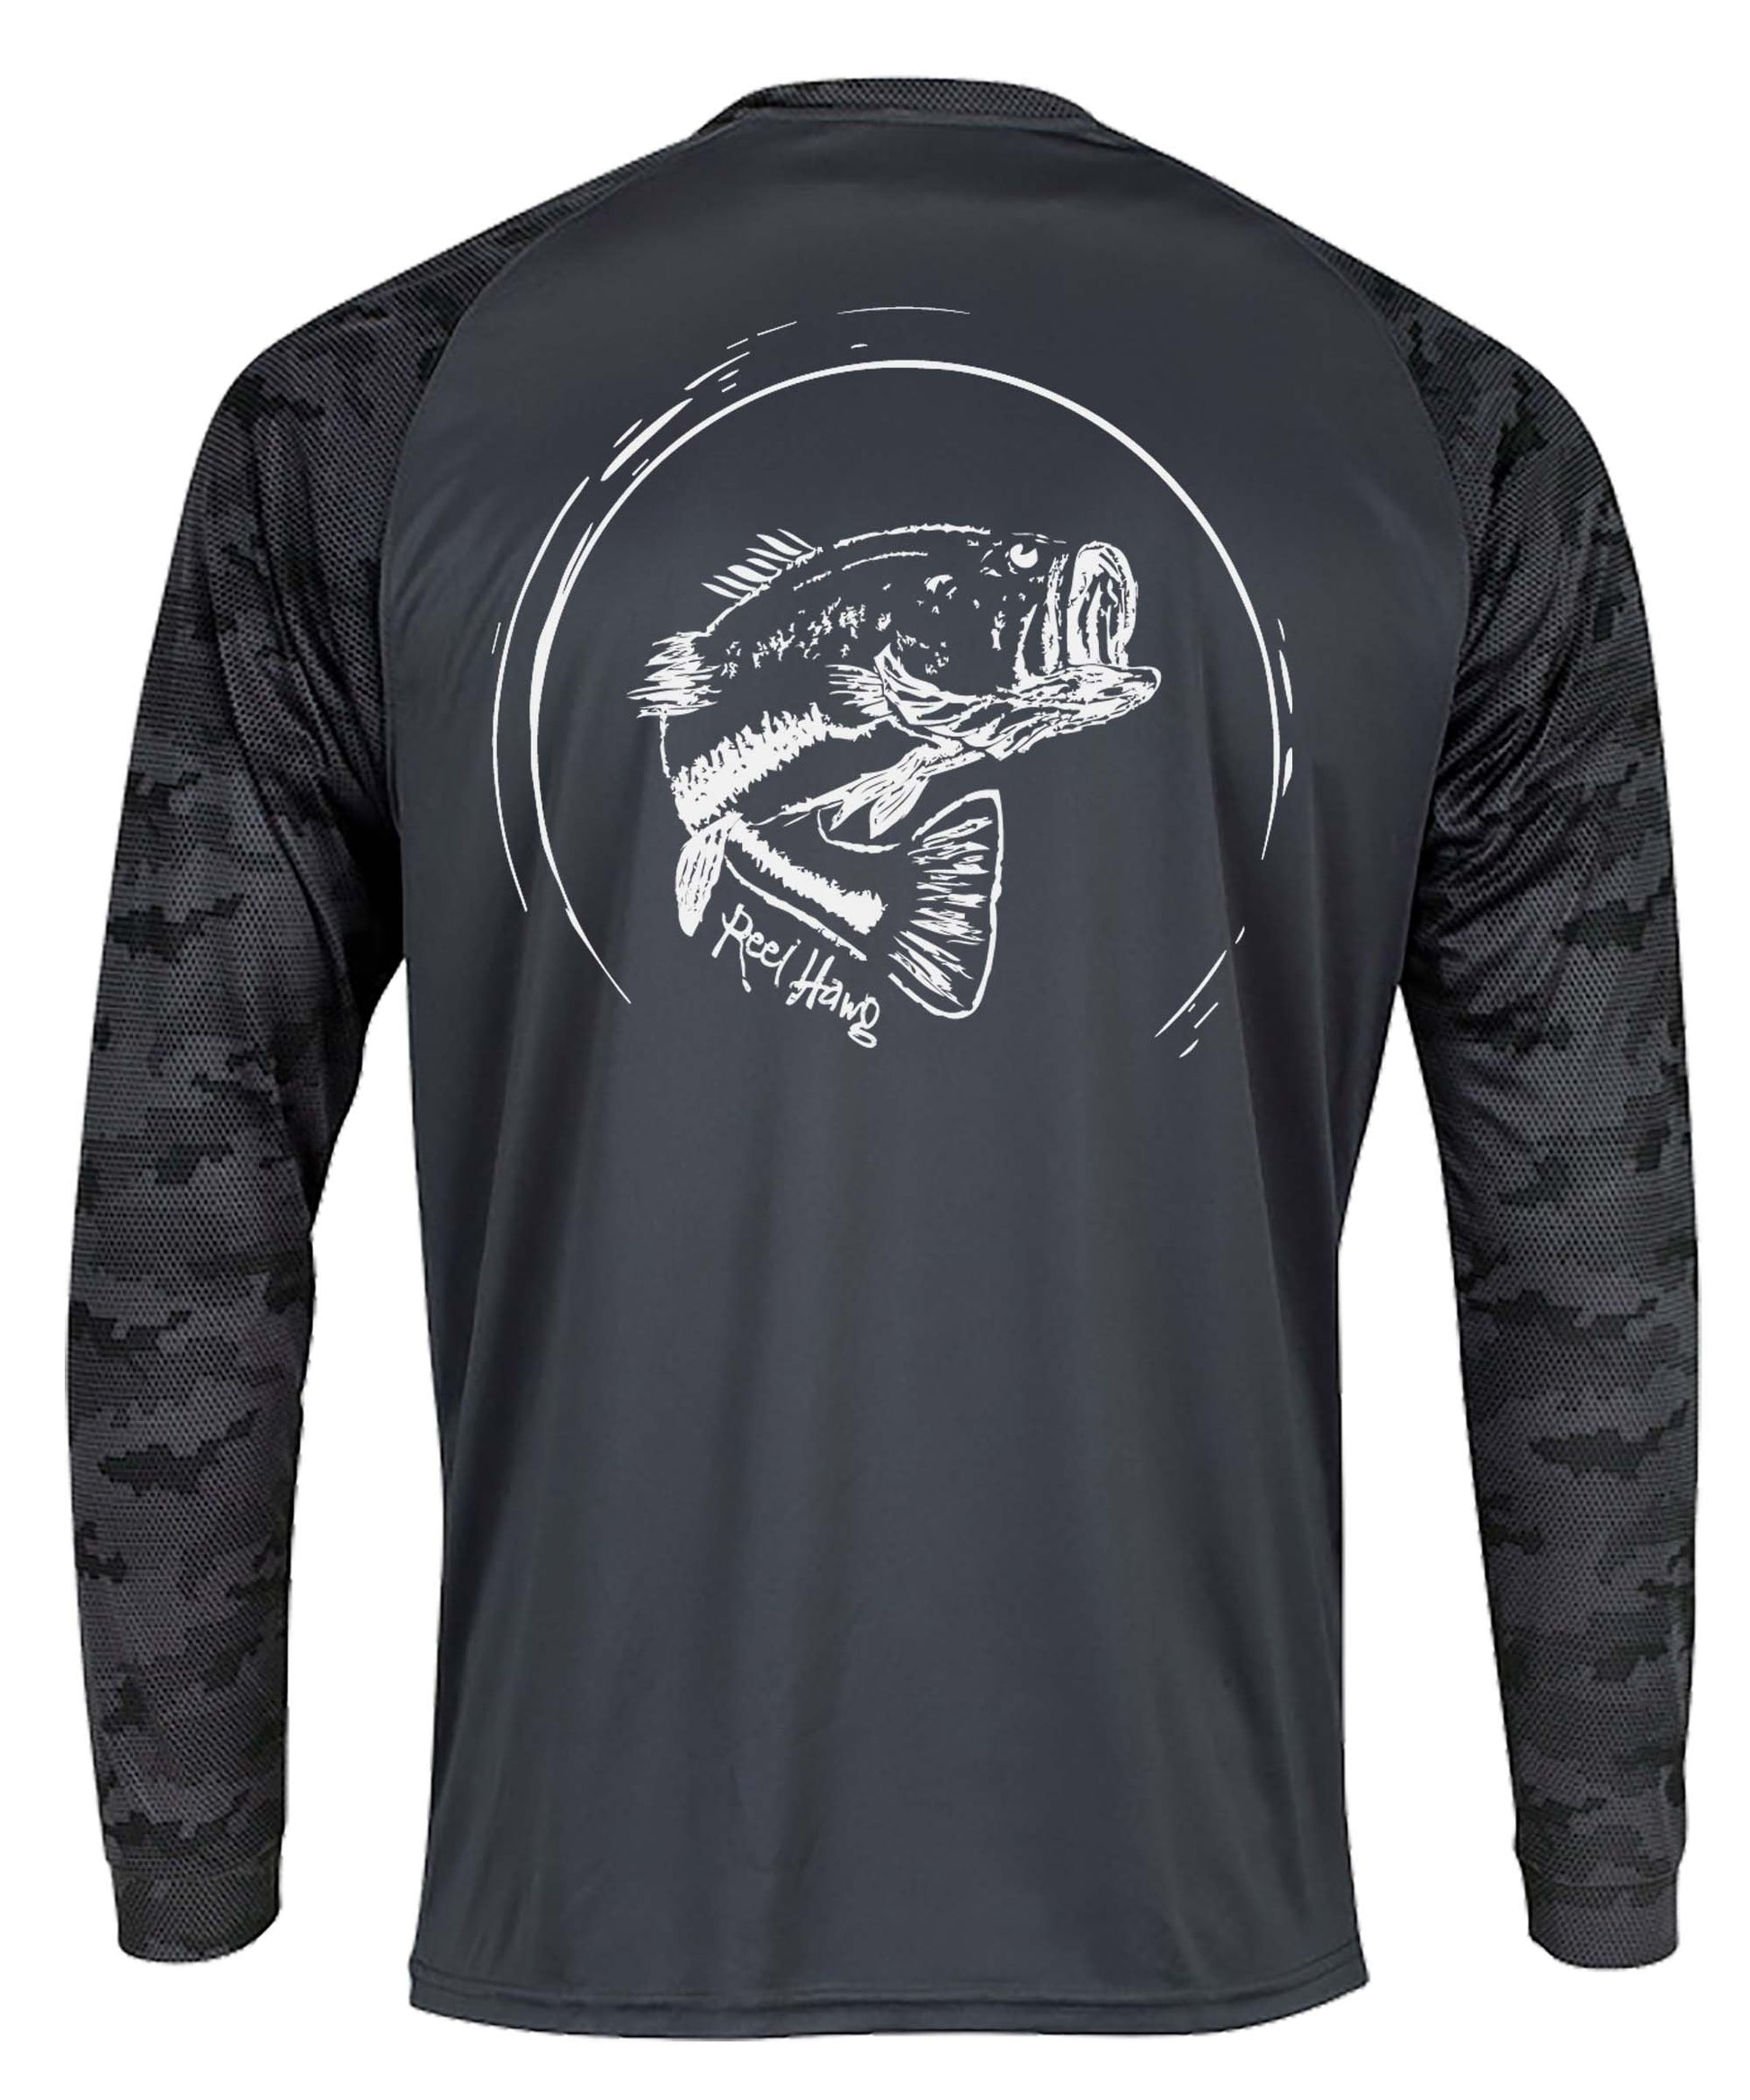 Bass Reel Hawg Performance Long & Short Sleeves Shirts - New Camo!